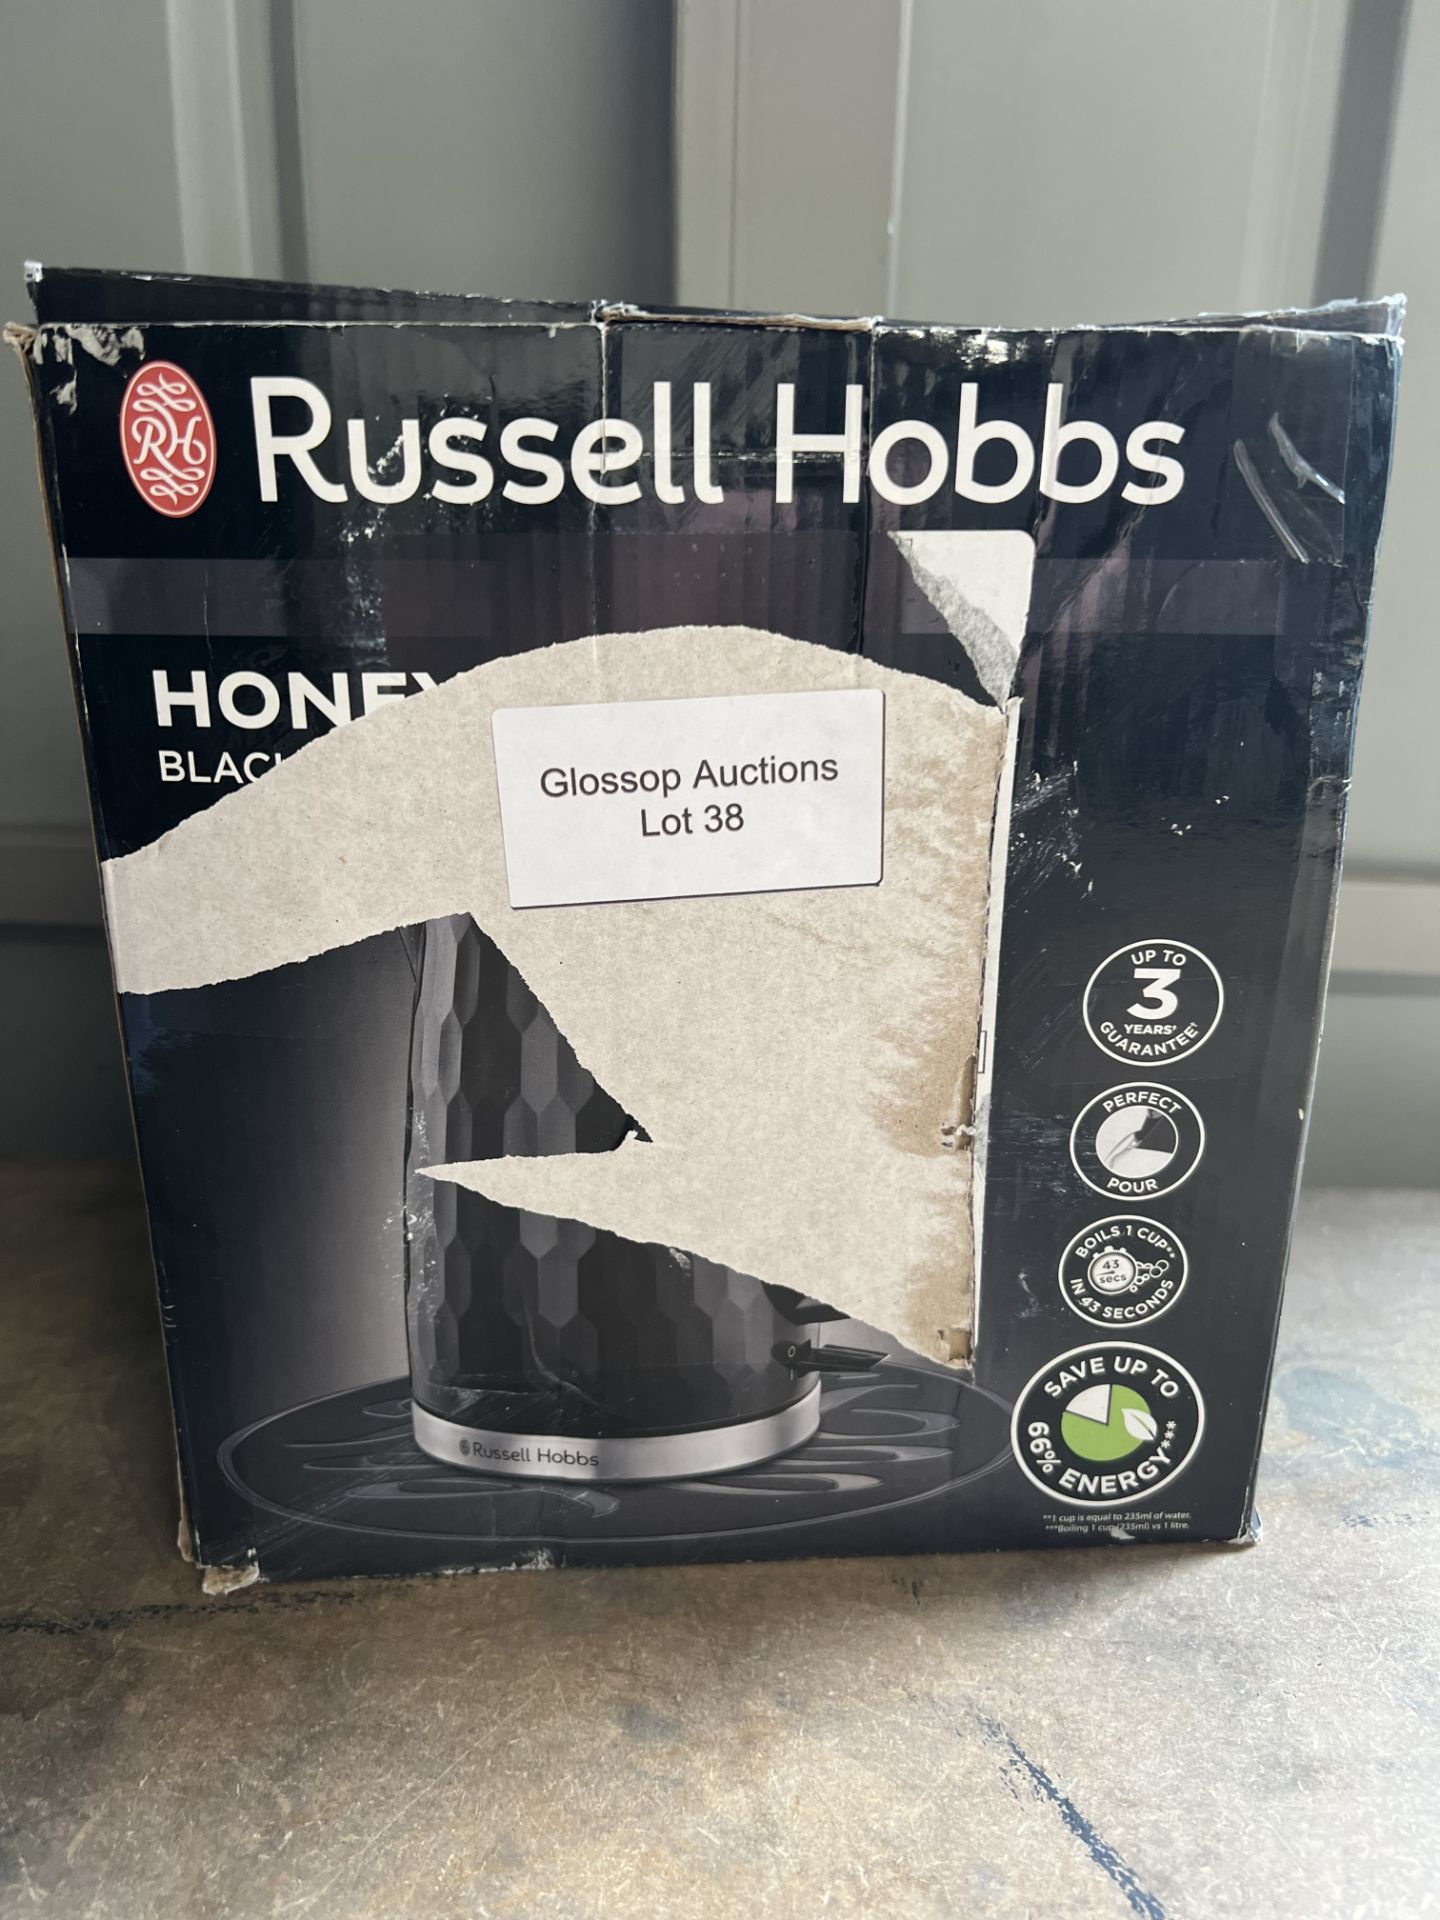 Russell Hobbs Honeycomb Black Plastic Kettle. RRP £30.00 - GRADE U - Image 2 of 2